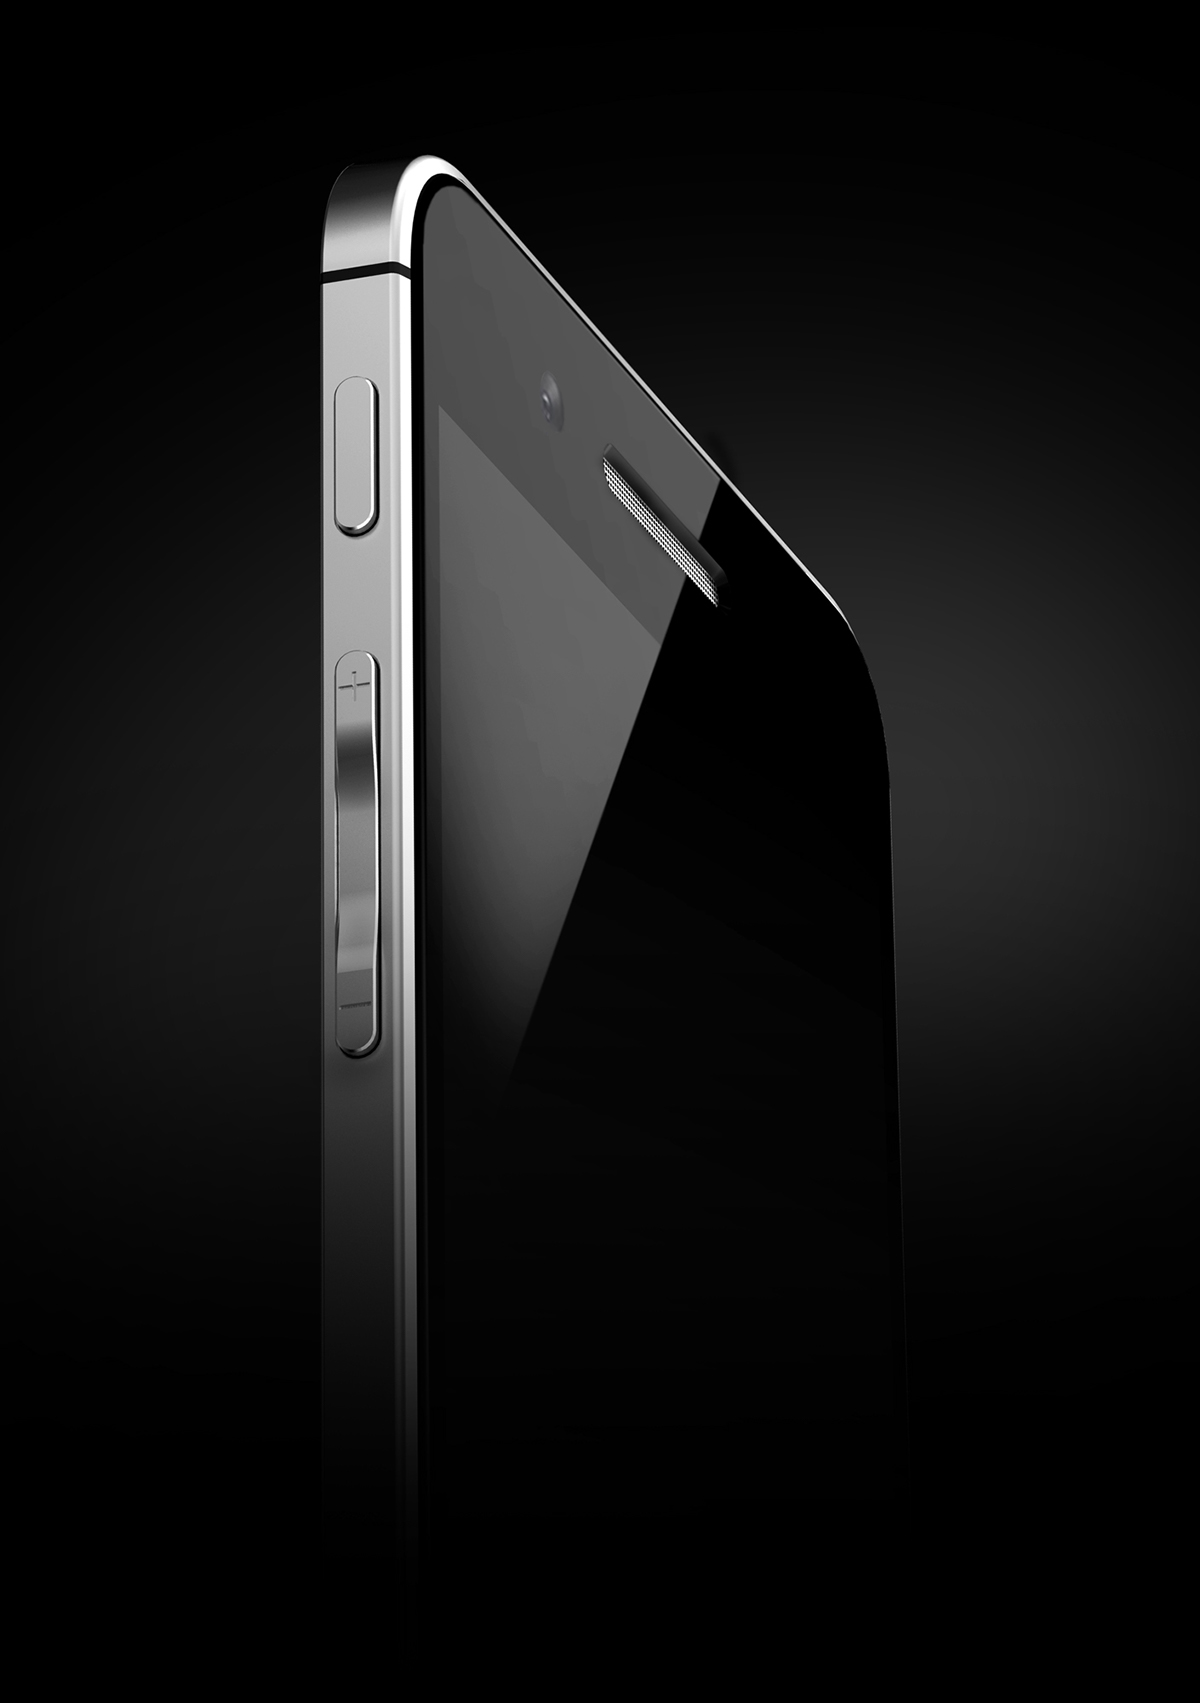 bonikowski Michal iphone 5 apple mindsailors Steve Jobs smartphone phone